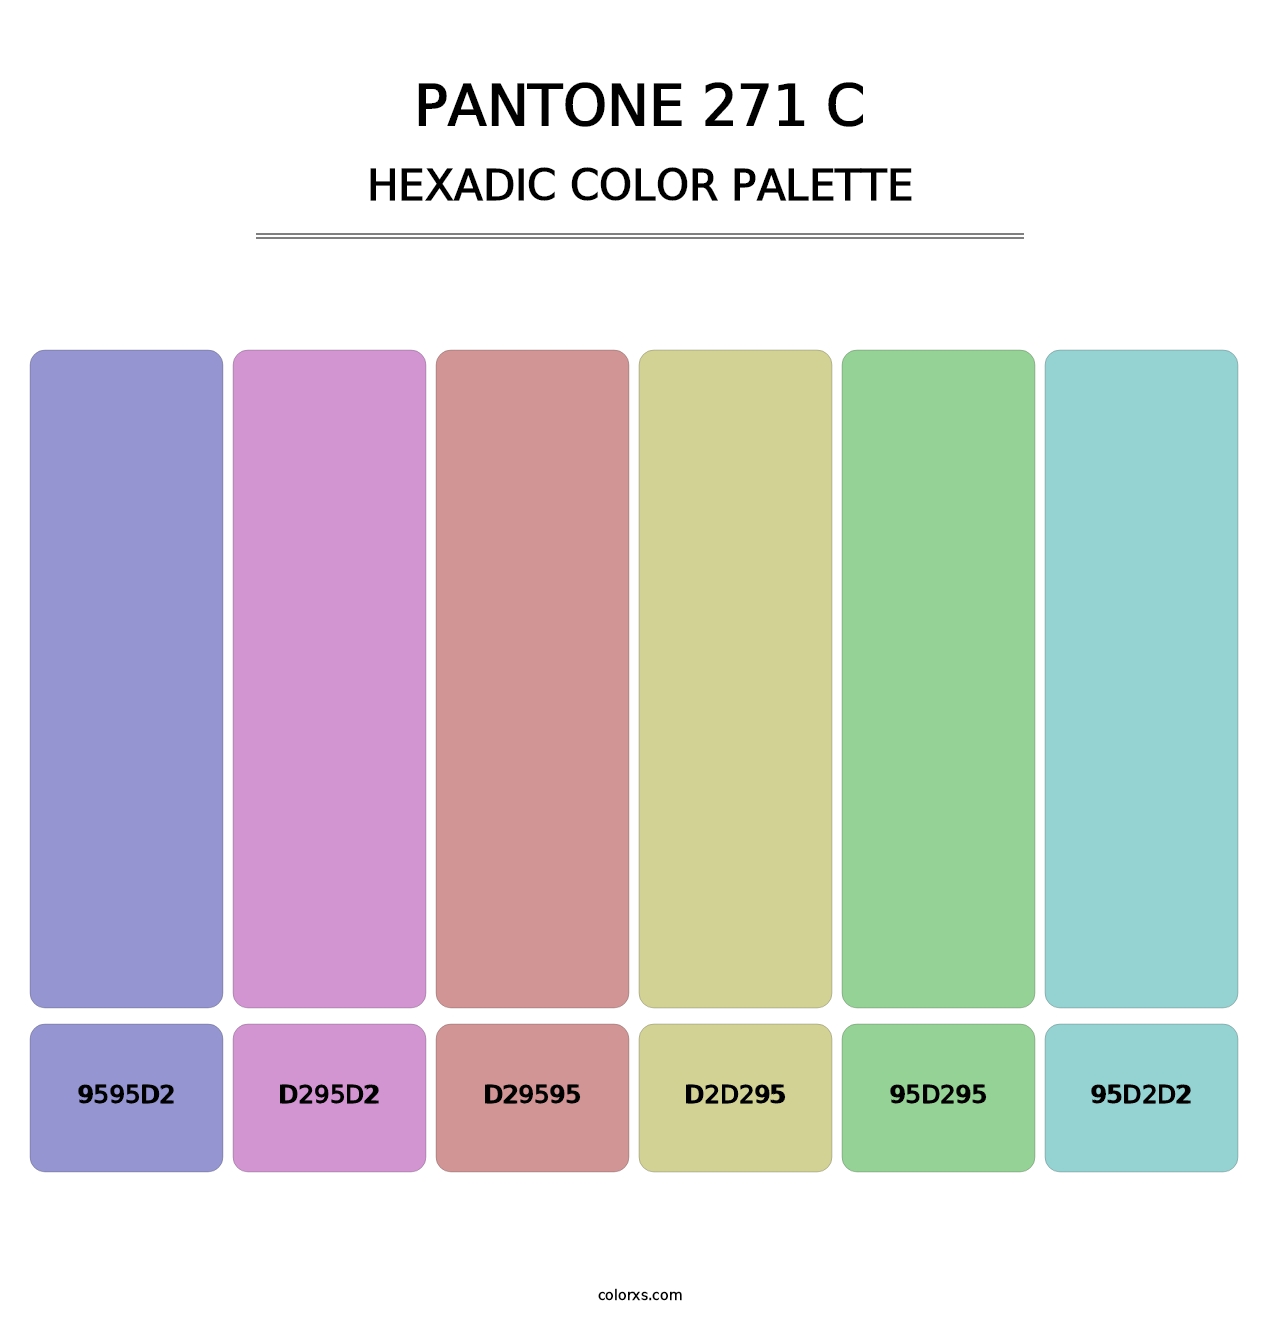 PANTONE 271 C - Hexadic Color Palette